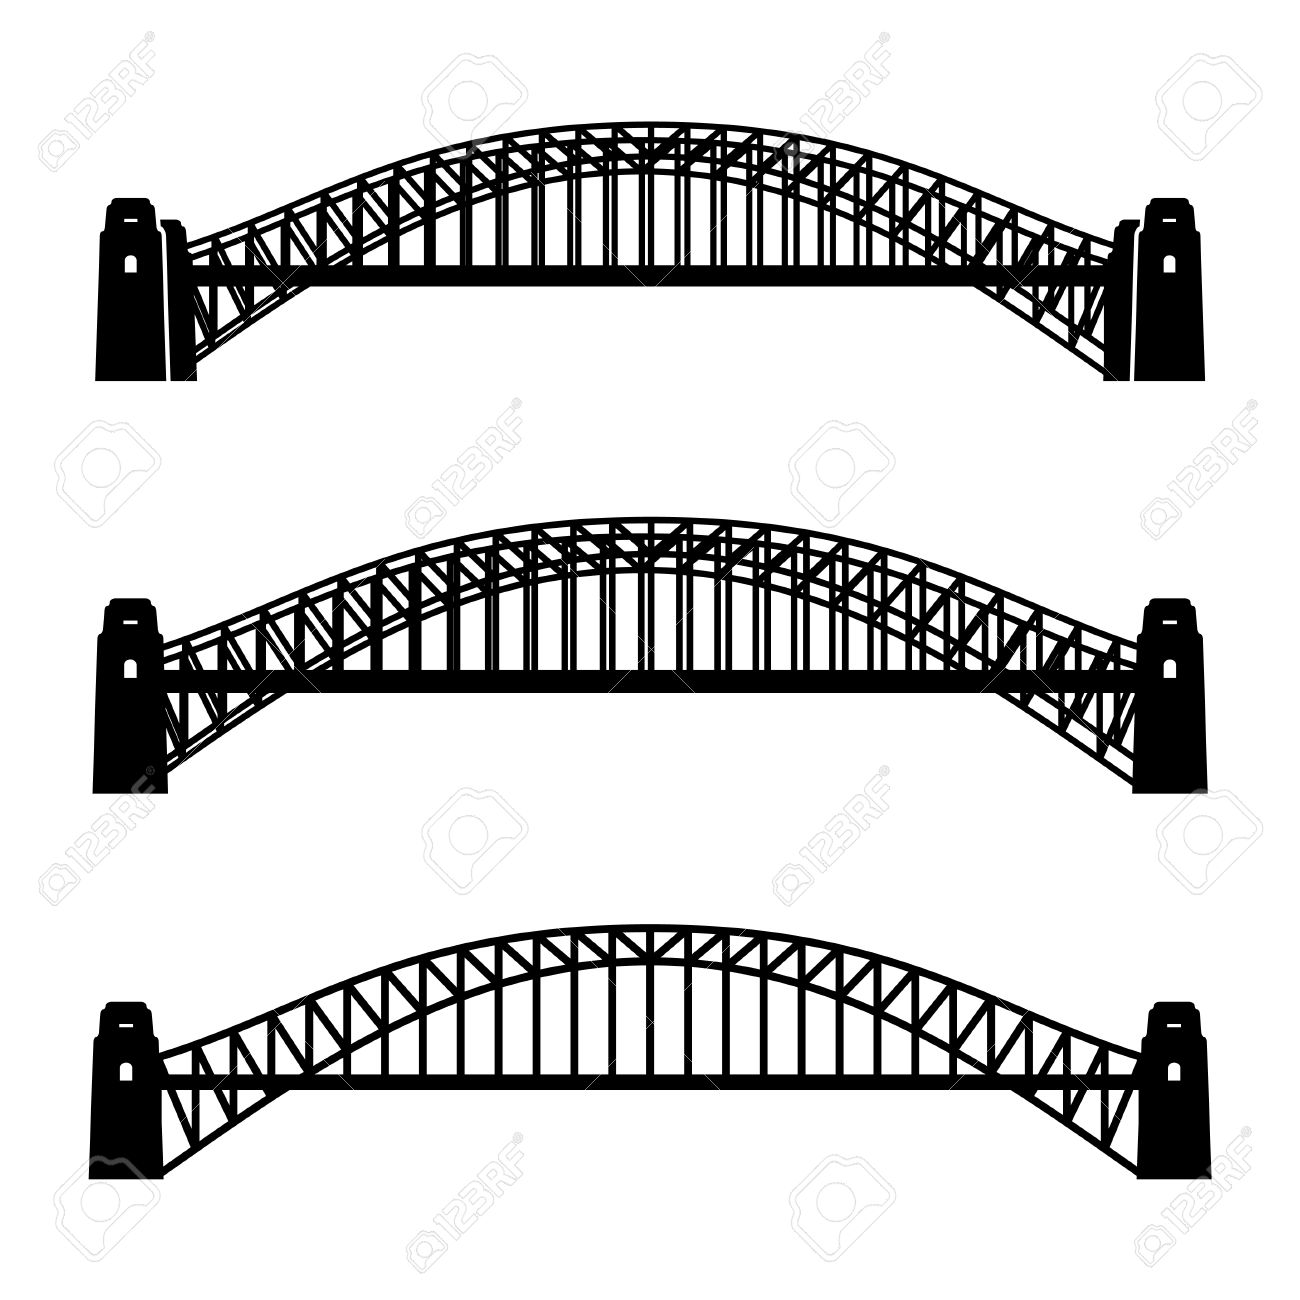 Sydney Harbour Bridge clipart #16, Download drawings